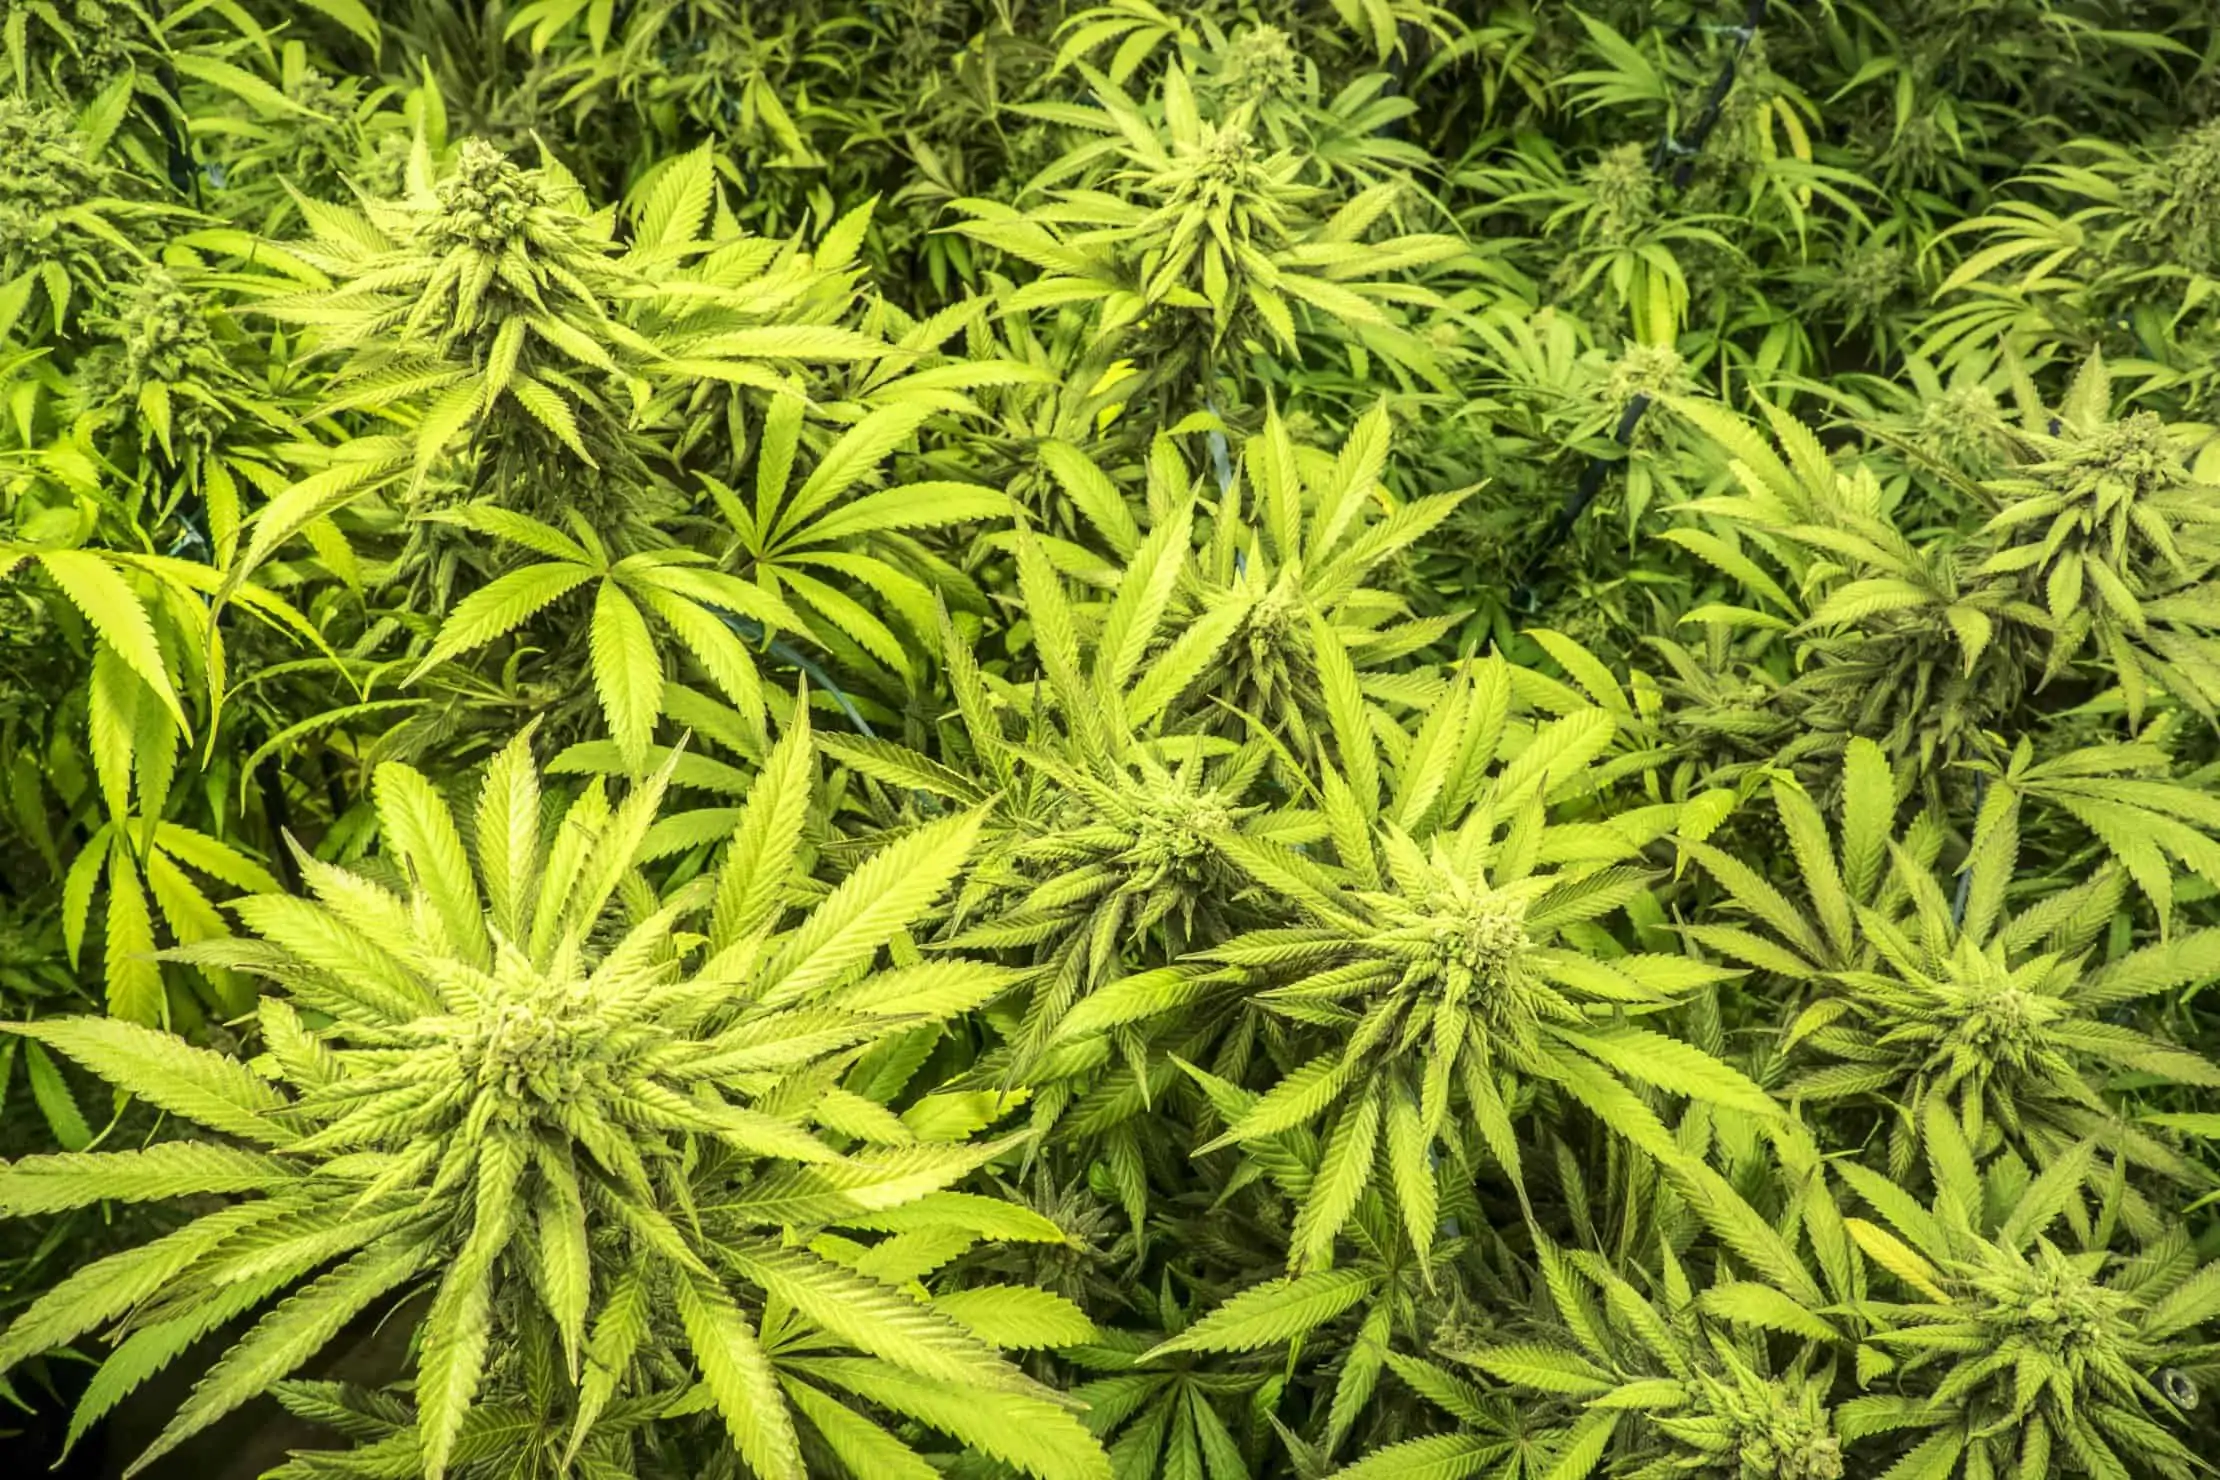 Planning You Indoor Mixed Cannabis Grow